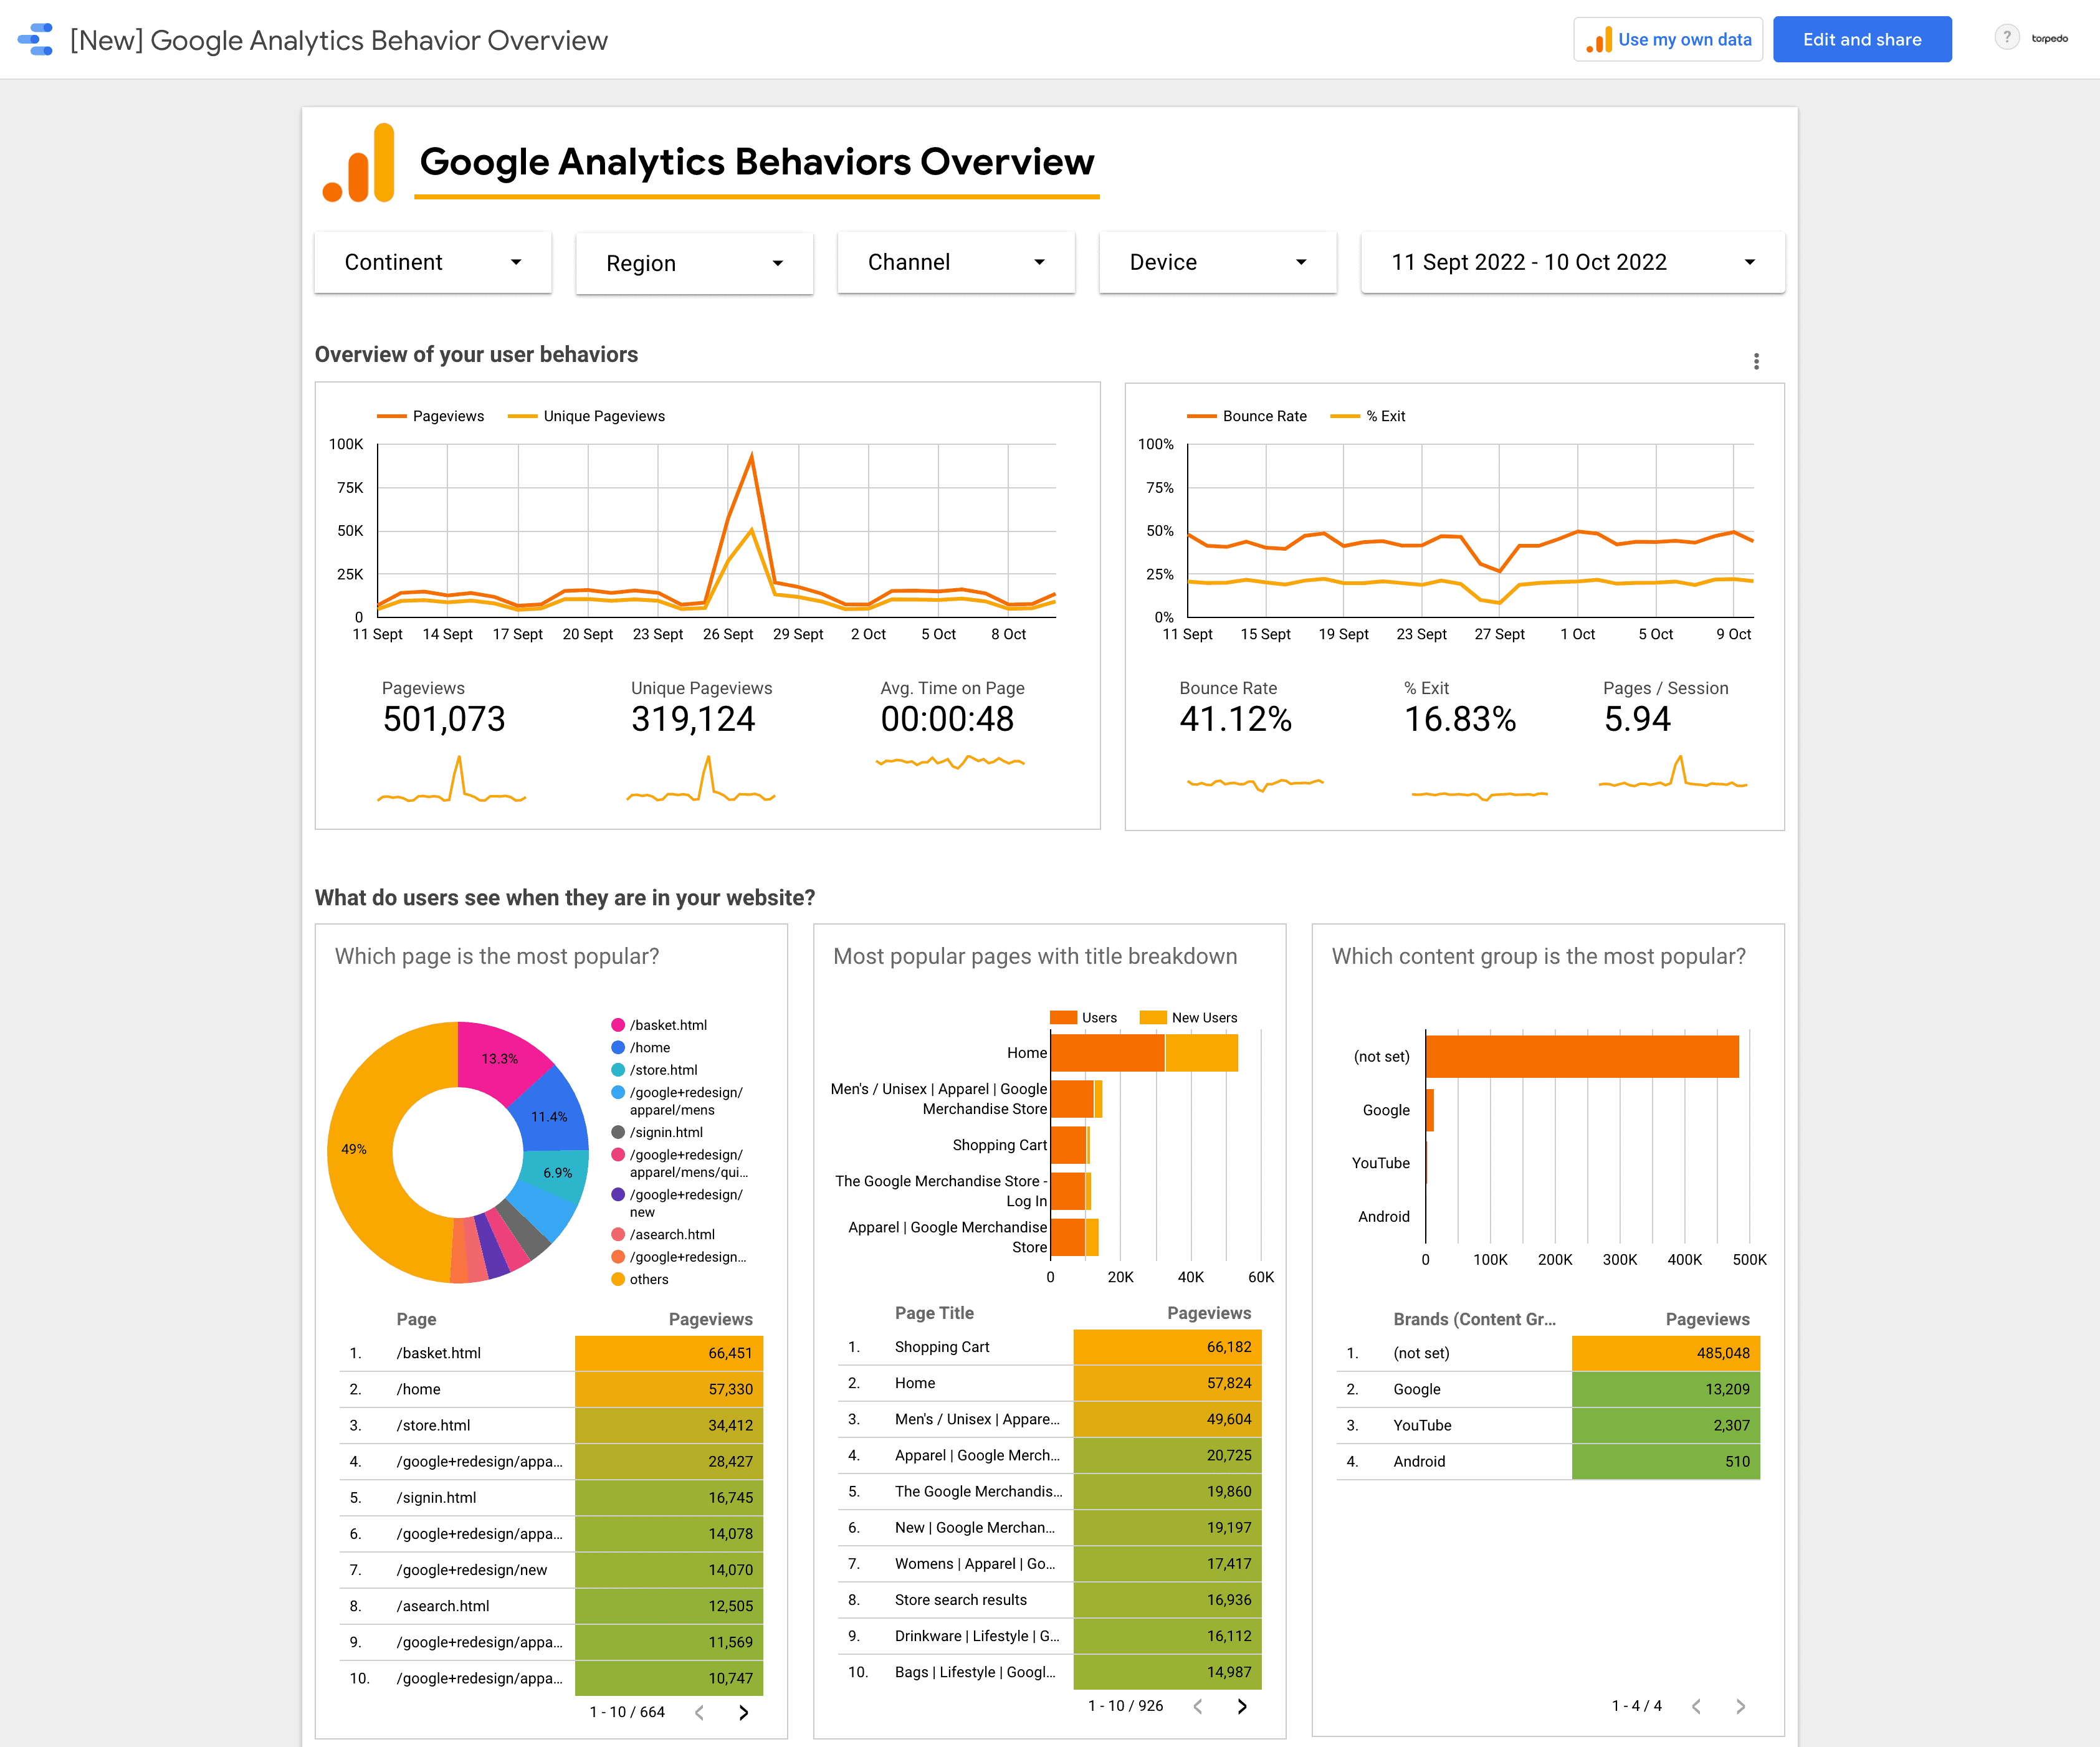  Looker Studio (Google Data Studio) Dashboard of Google Analytics User Behaviour